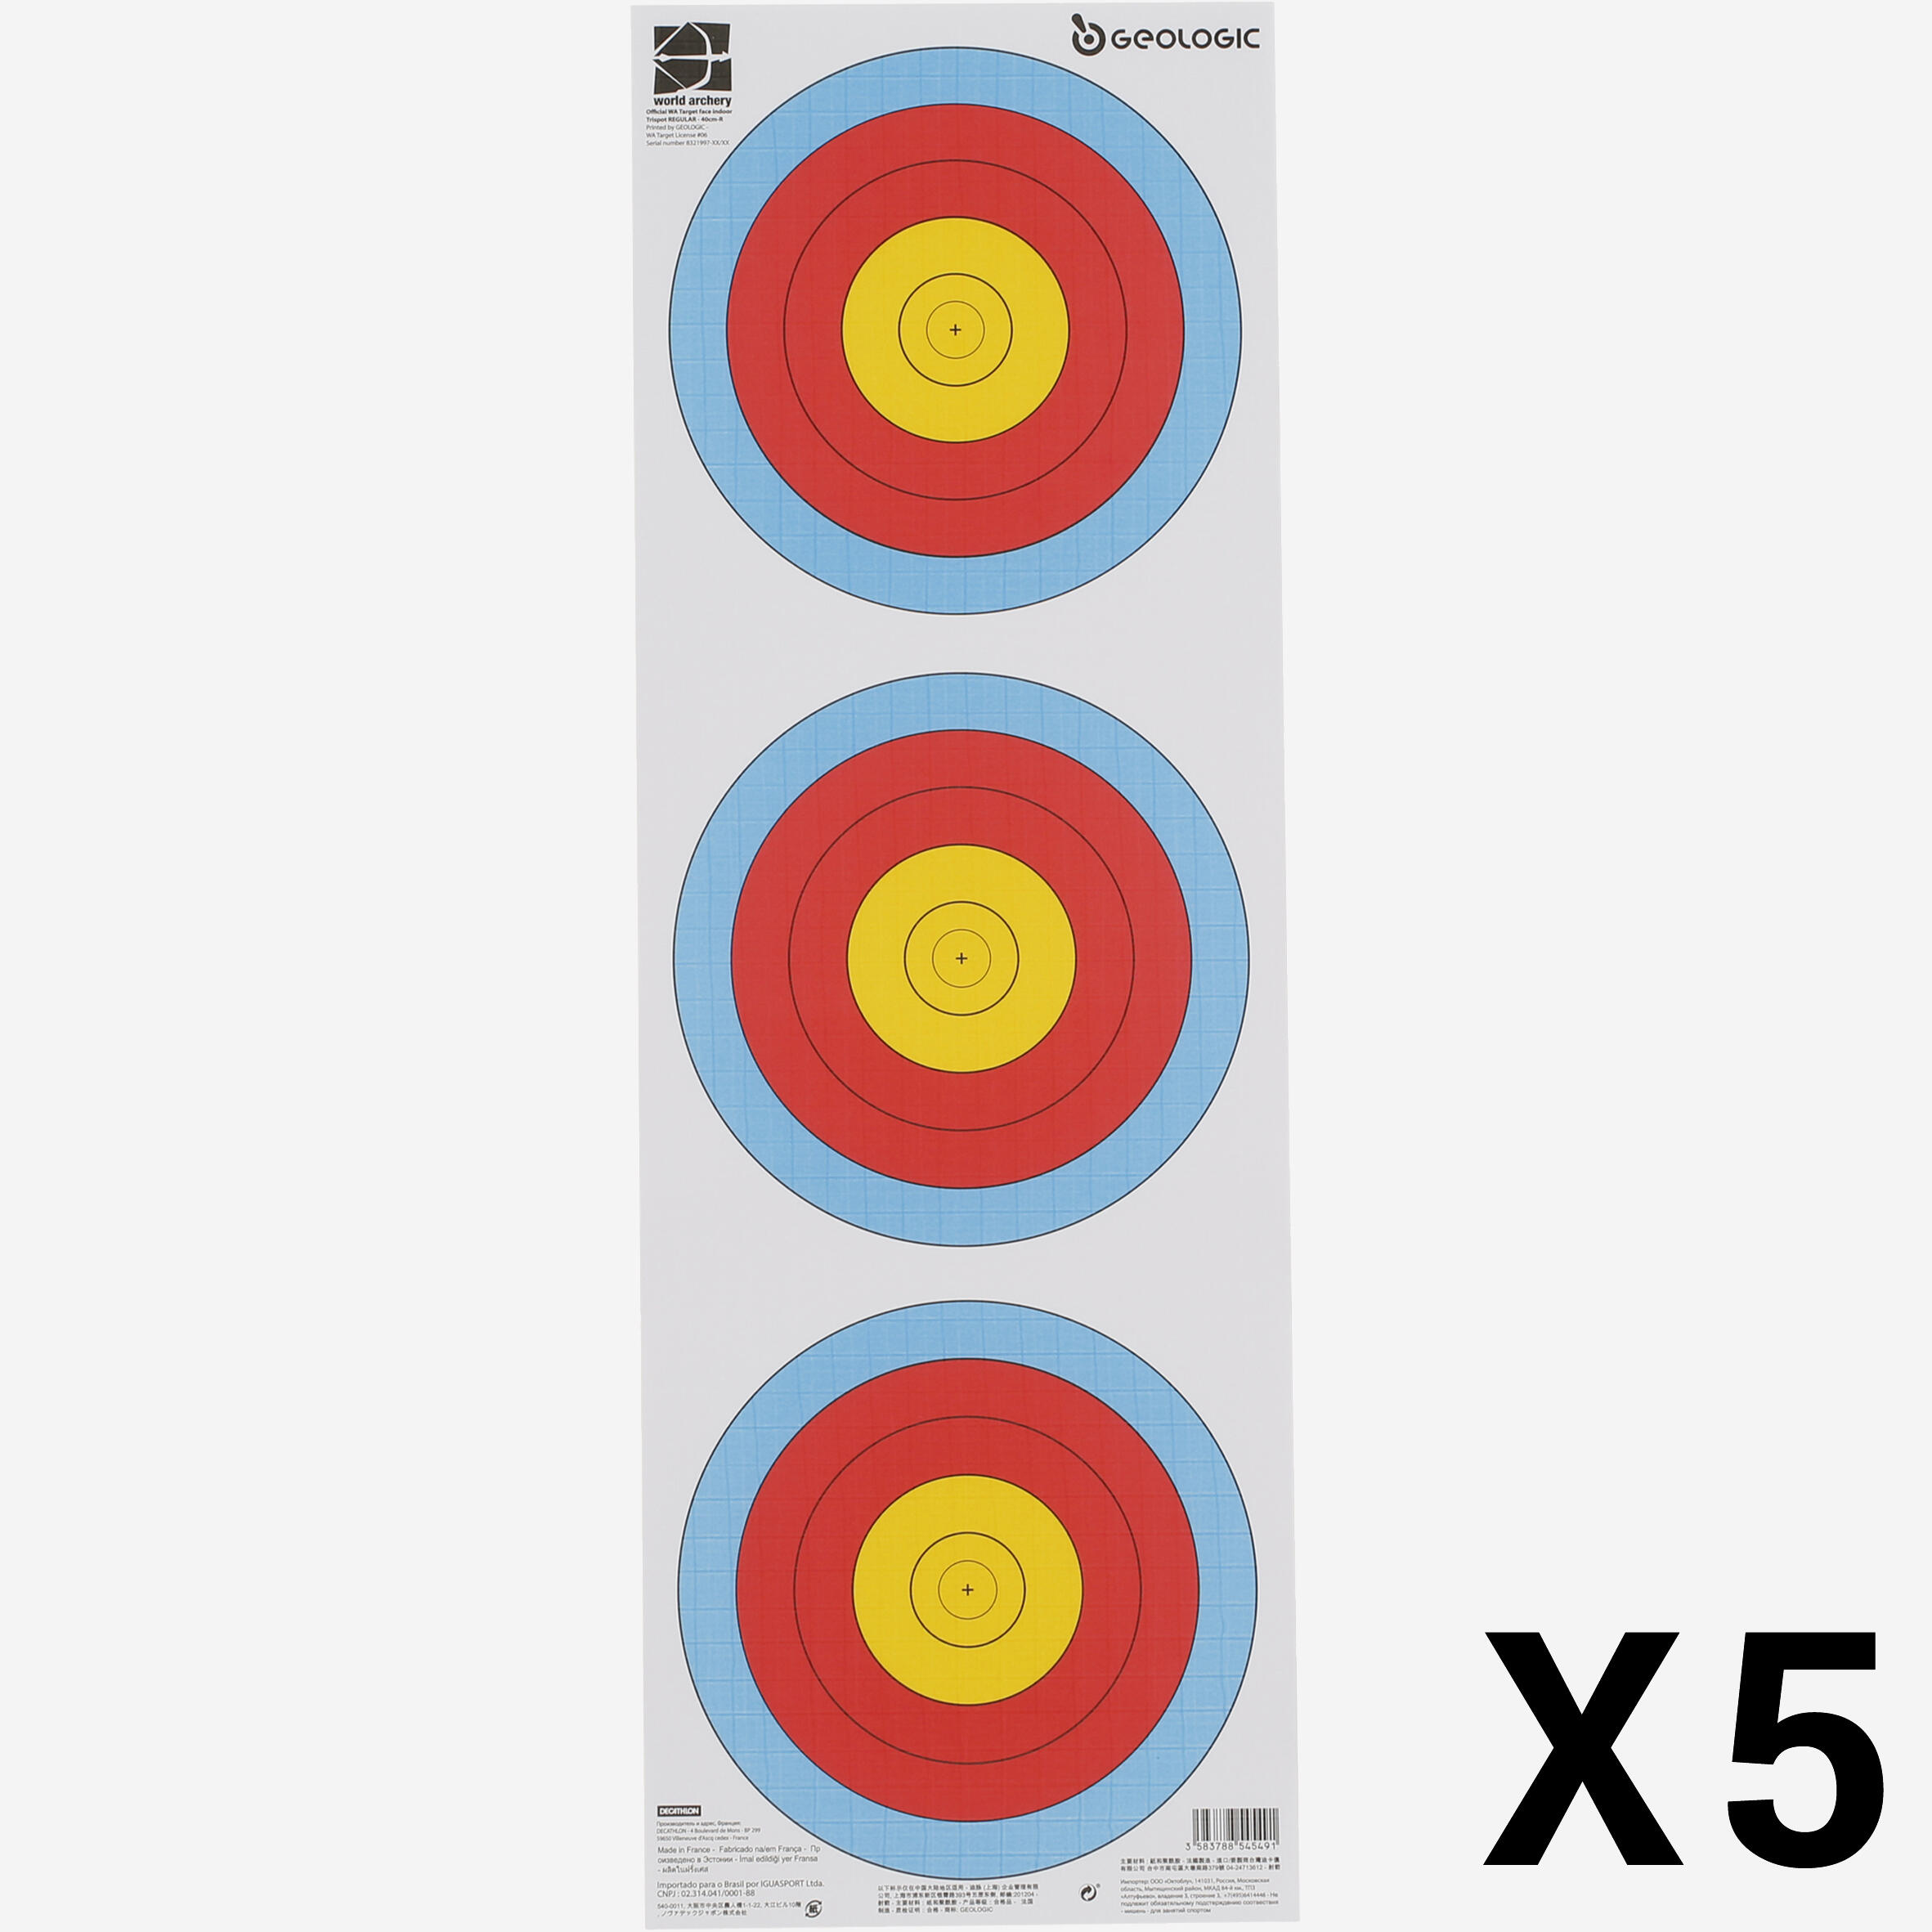 GEOLOGIC Trispot Archery Target Face x5